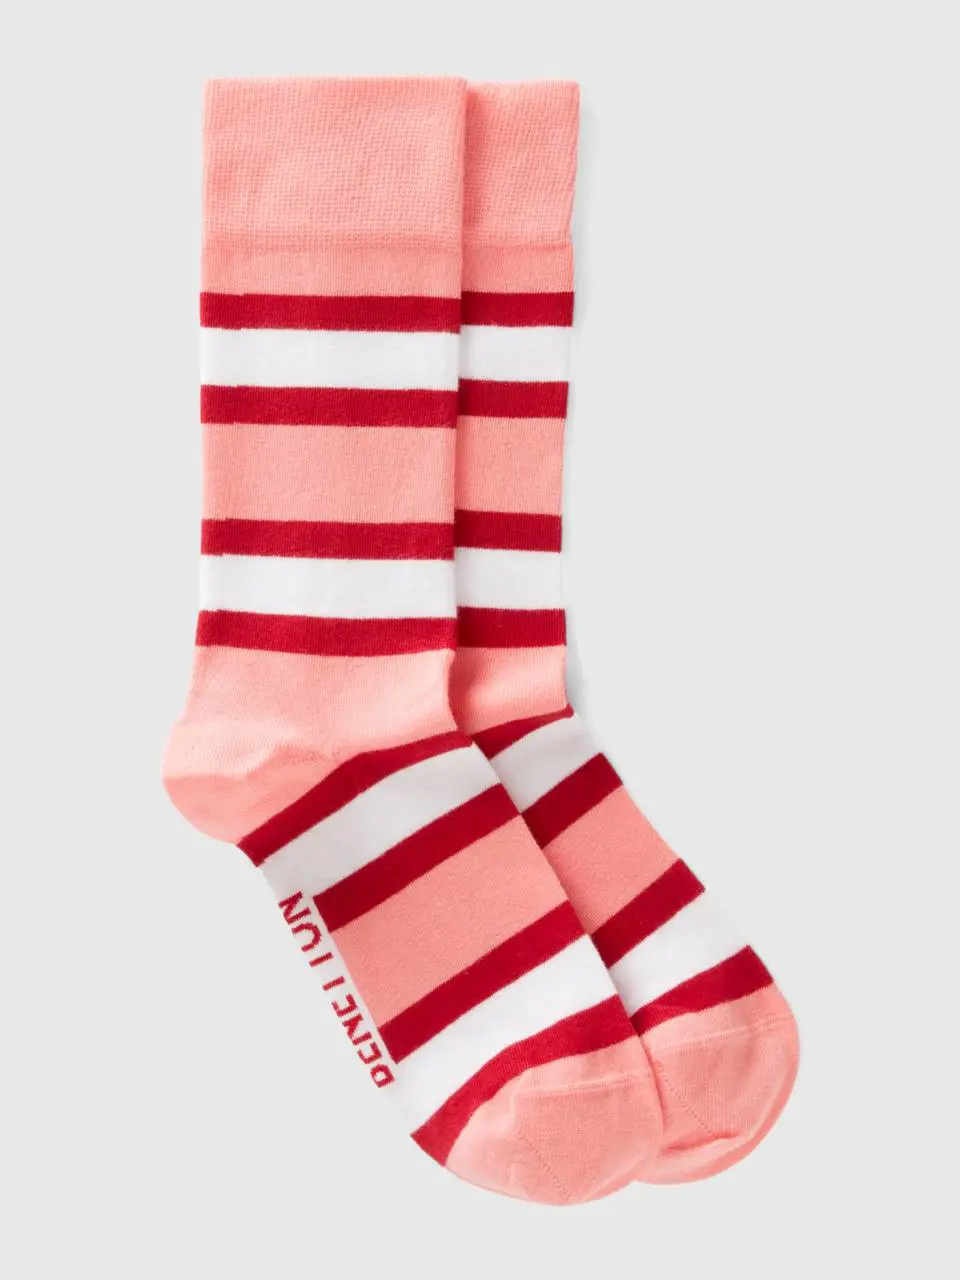 Benetton pink striped socks. 1